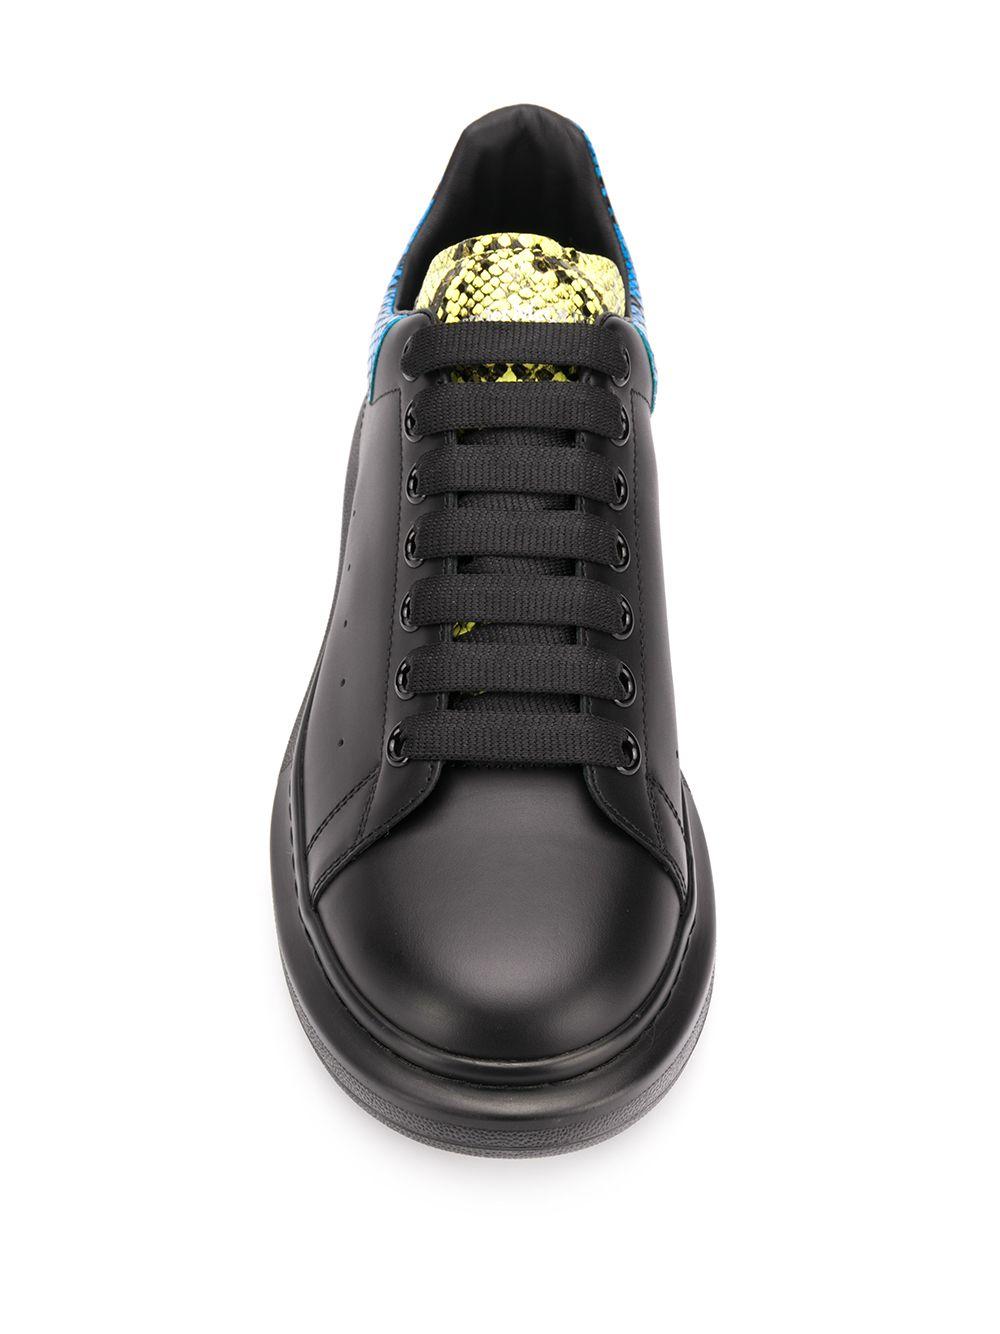 Alexander McQueen Shoes for Men - Shop Now on FARFETCH